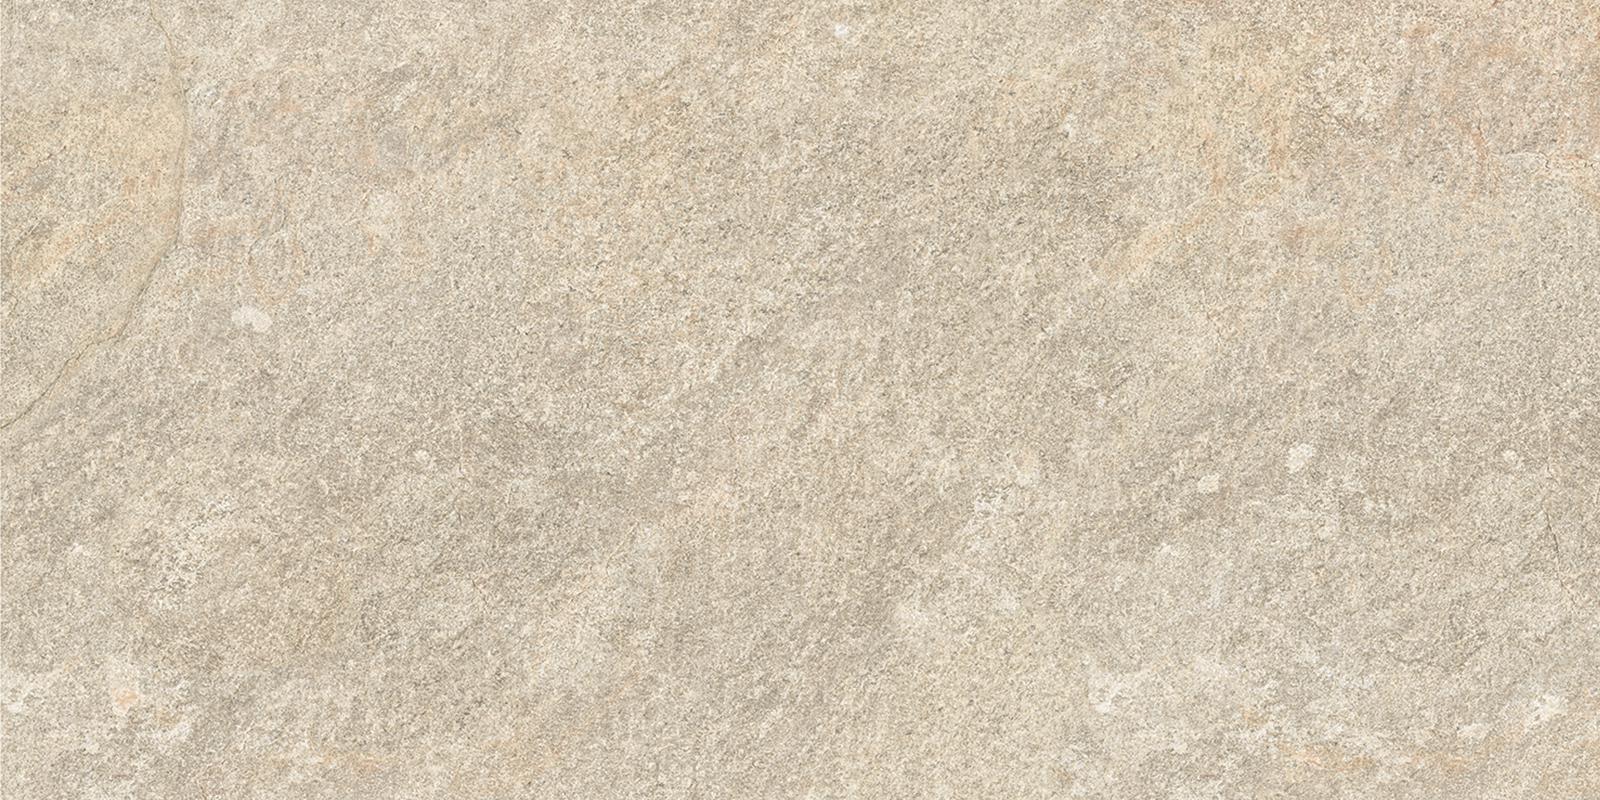 Ergon Oros Stone Sand Tecnica 60x120